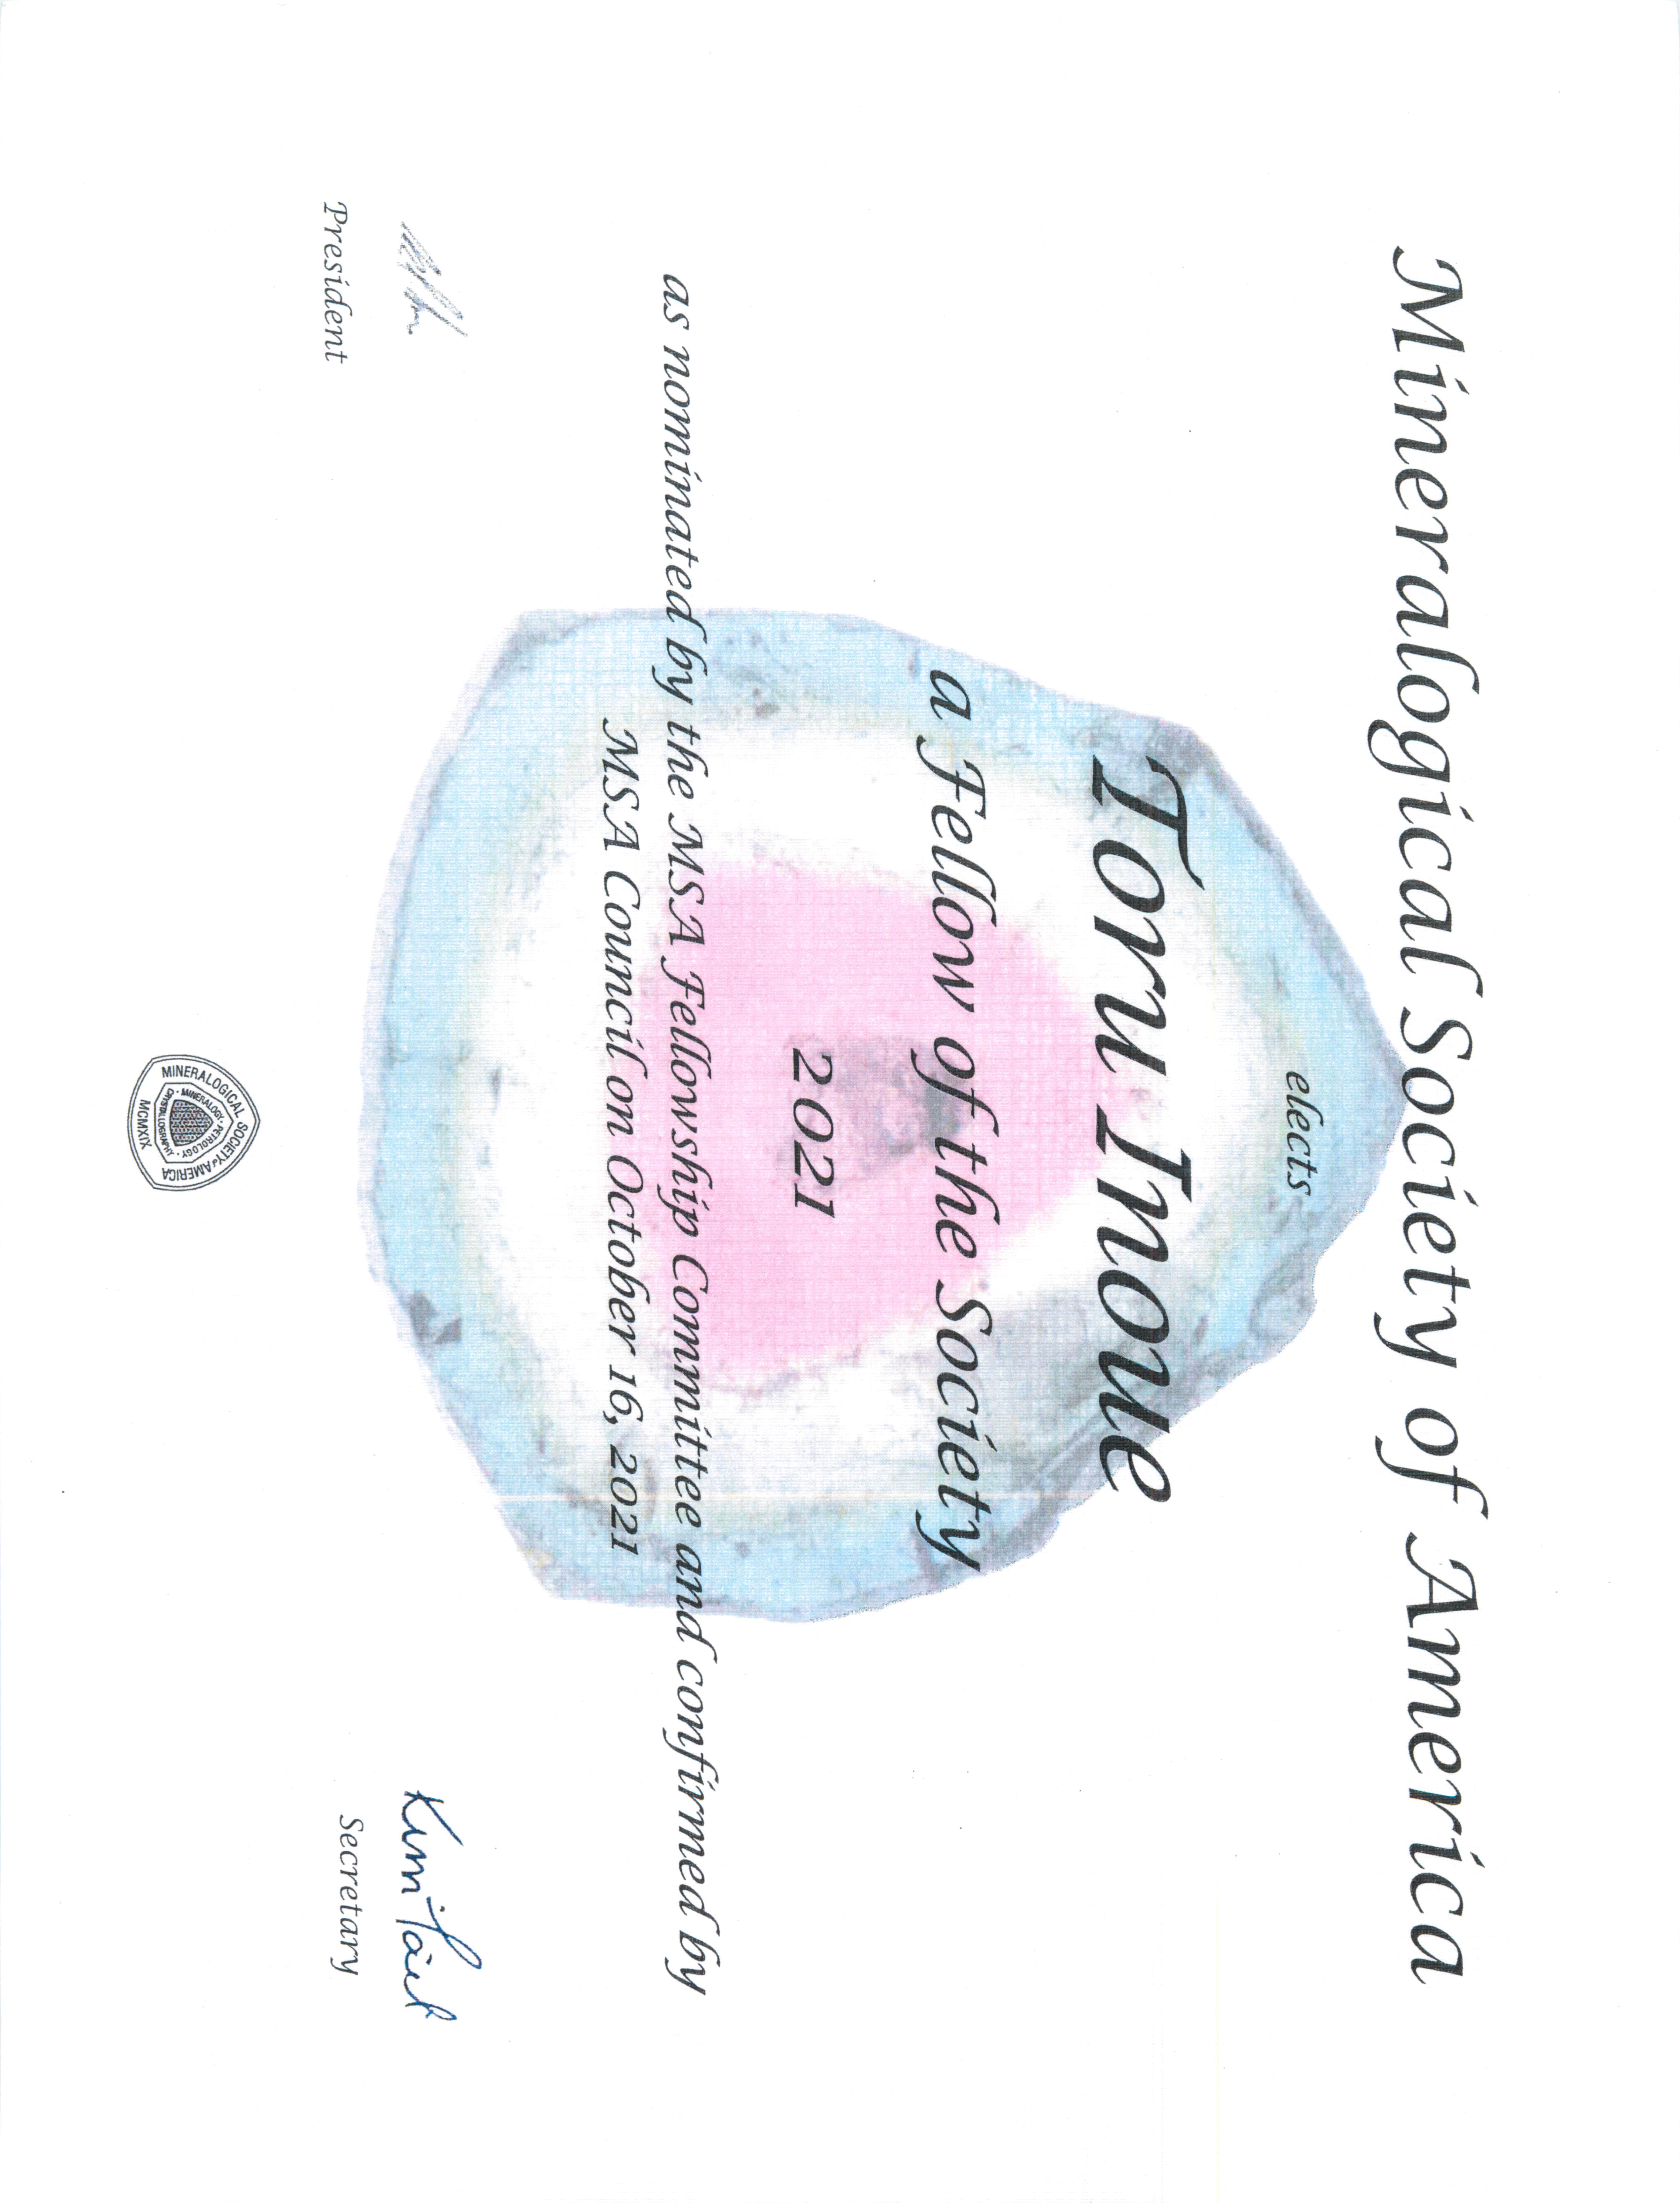 2021 MSA fellow certificate